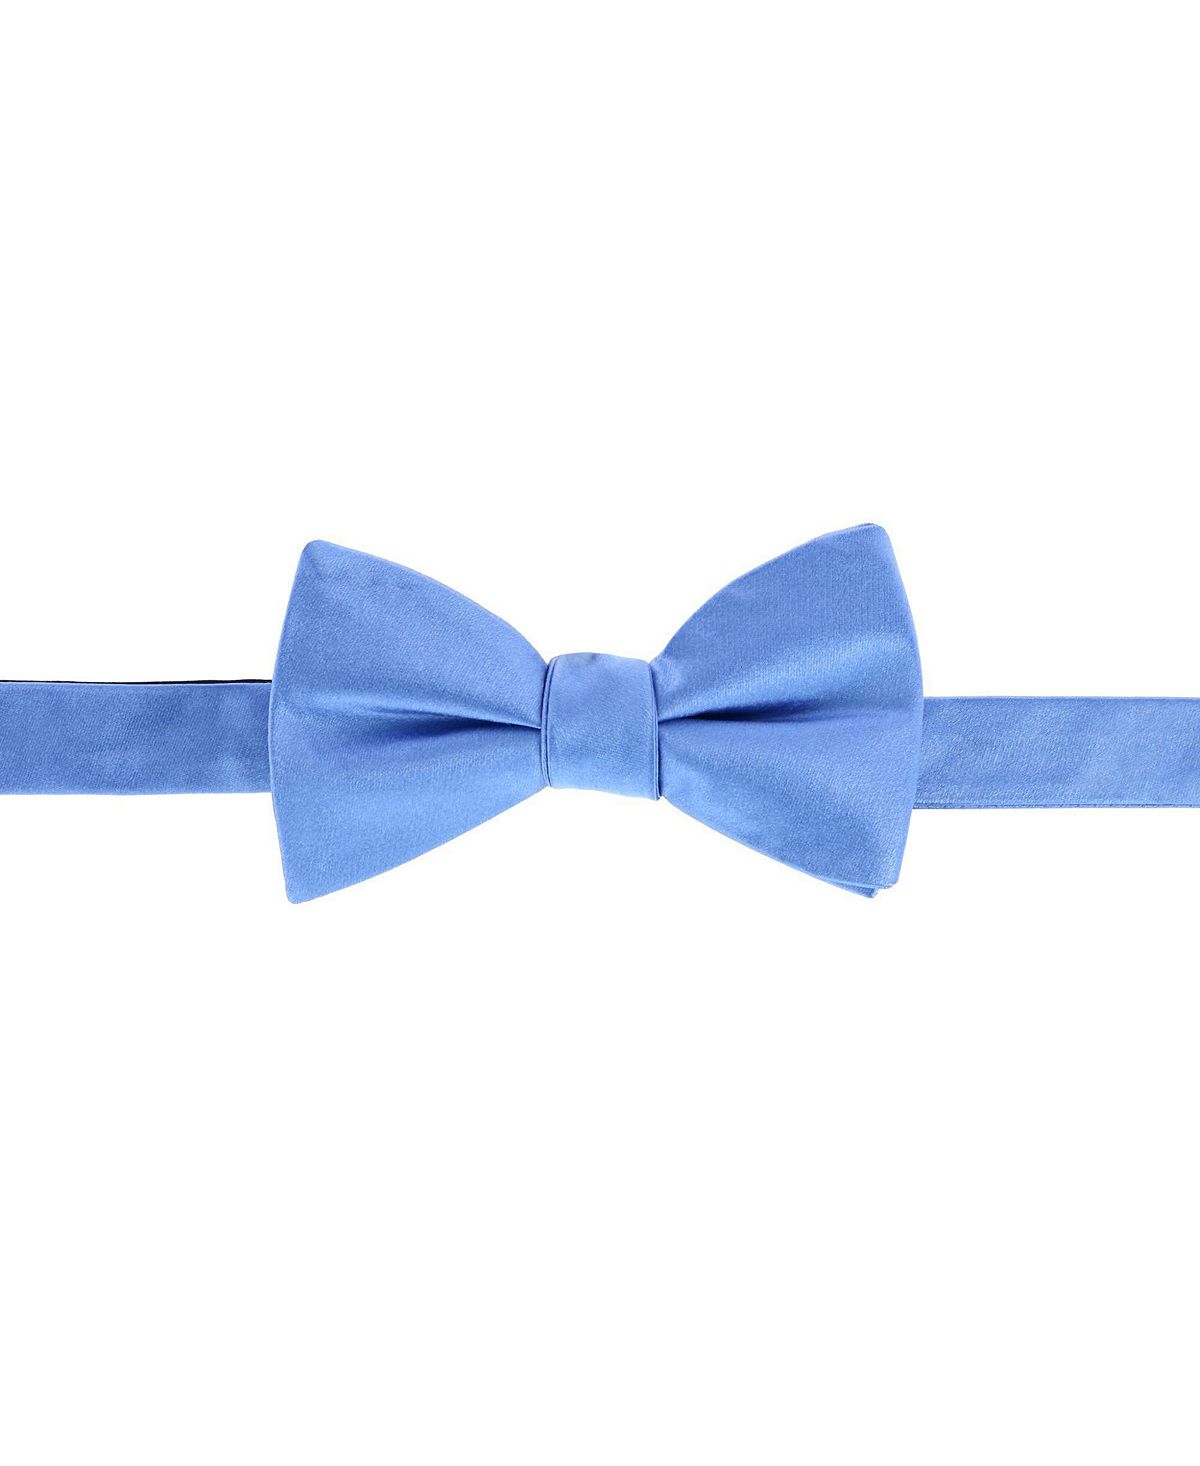 Однотонный шелковый галстук-бабочка Sutton TRAFALGAR серый галстук бабочка самовяз rene lezard 64768